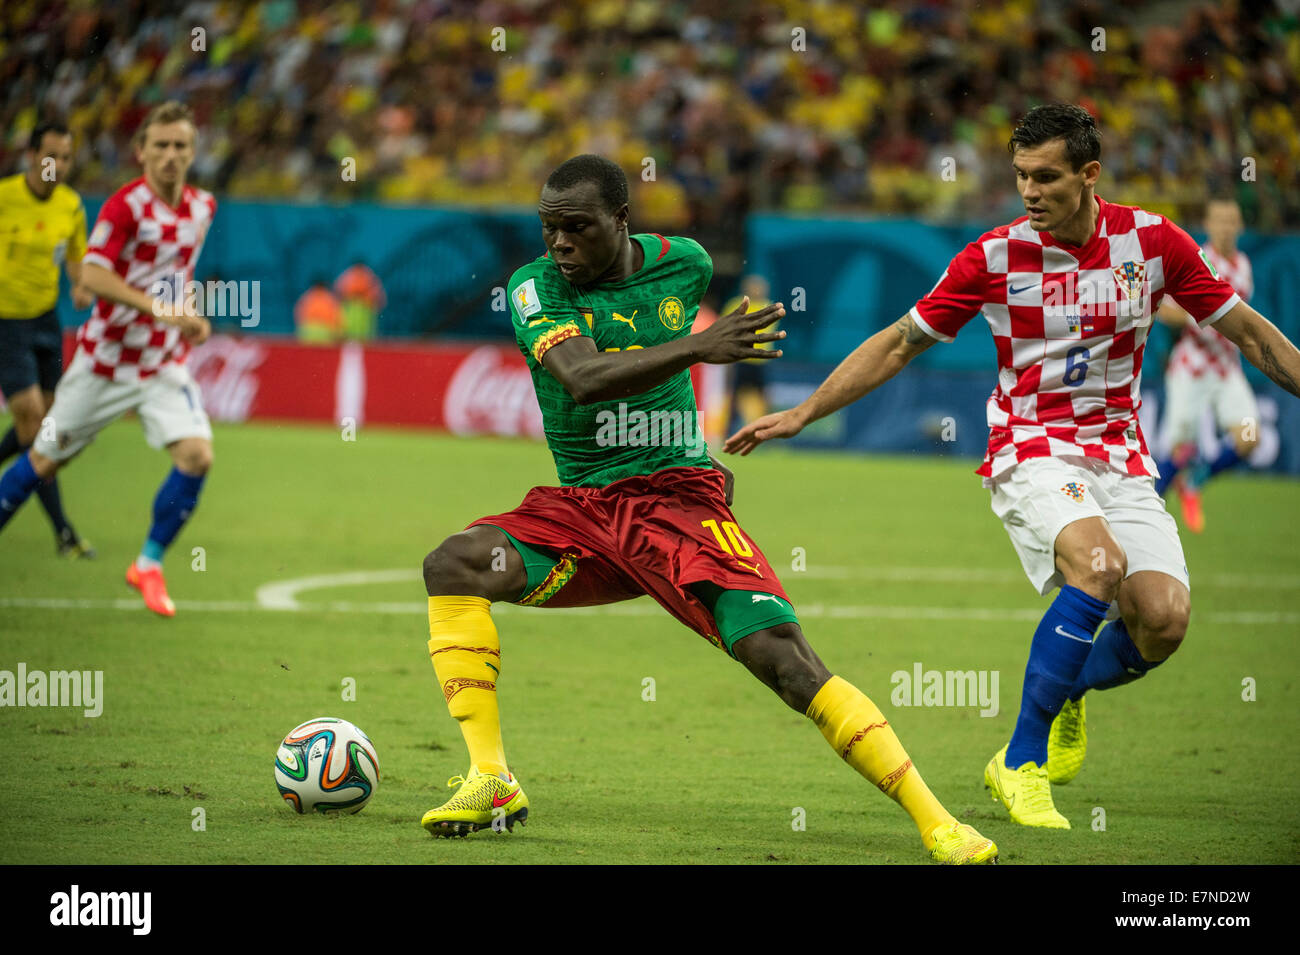 Vincent Aboubakar. Croatia v Cameroon. Group match. FIFA World Cup 2014 Brazil. Arena Amazonia, Manaus. 18 Jun 2014. Stock Photo